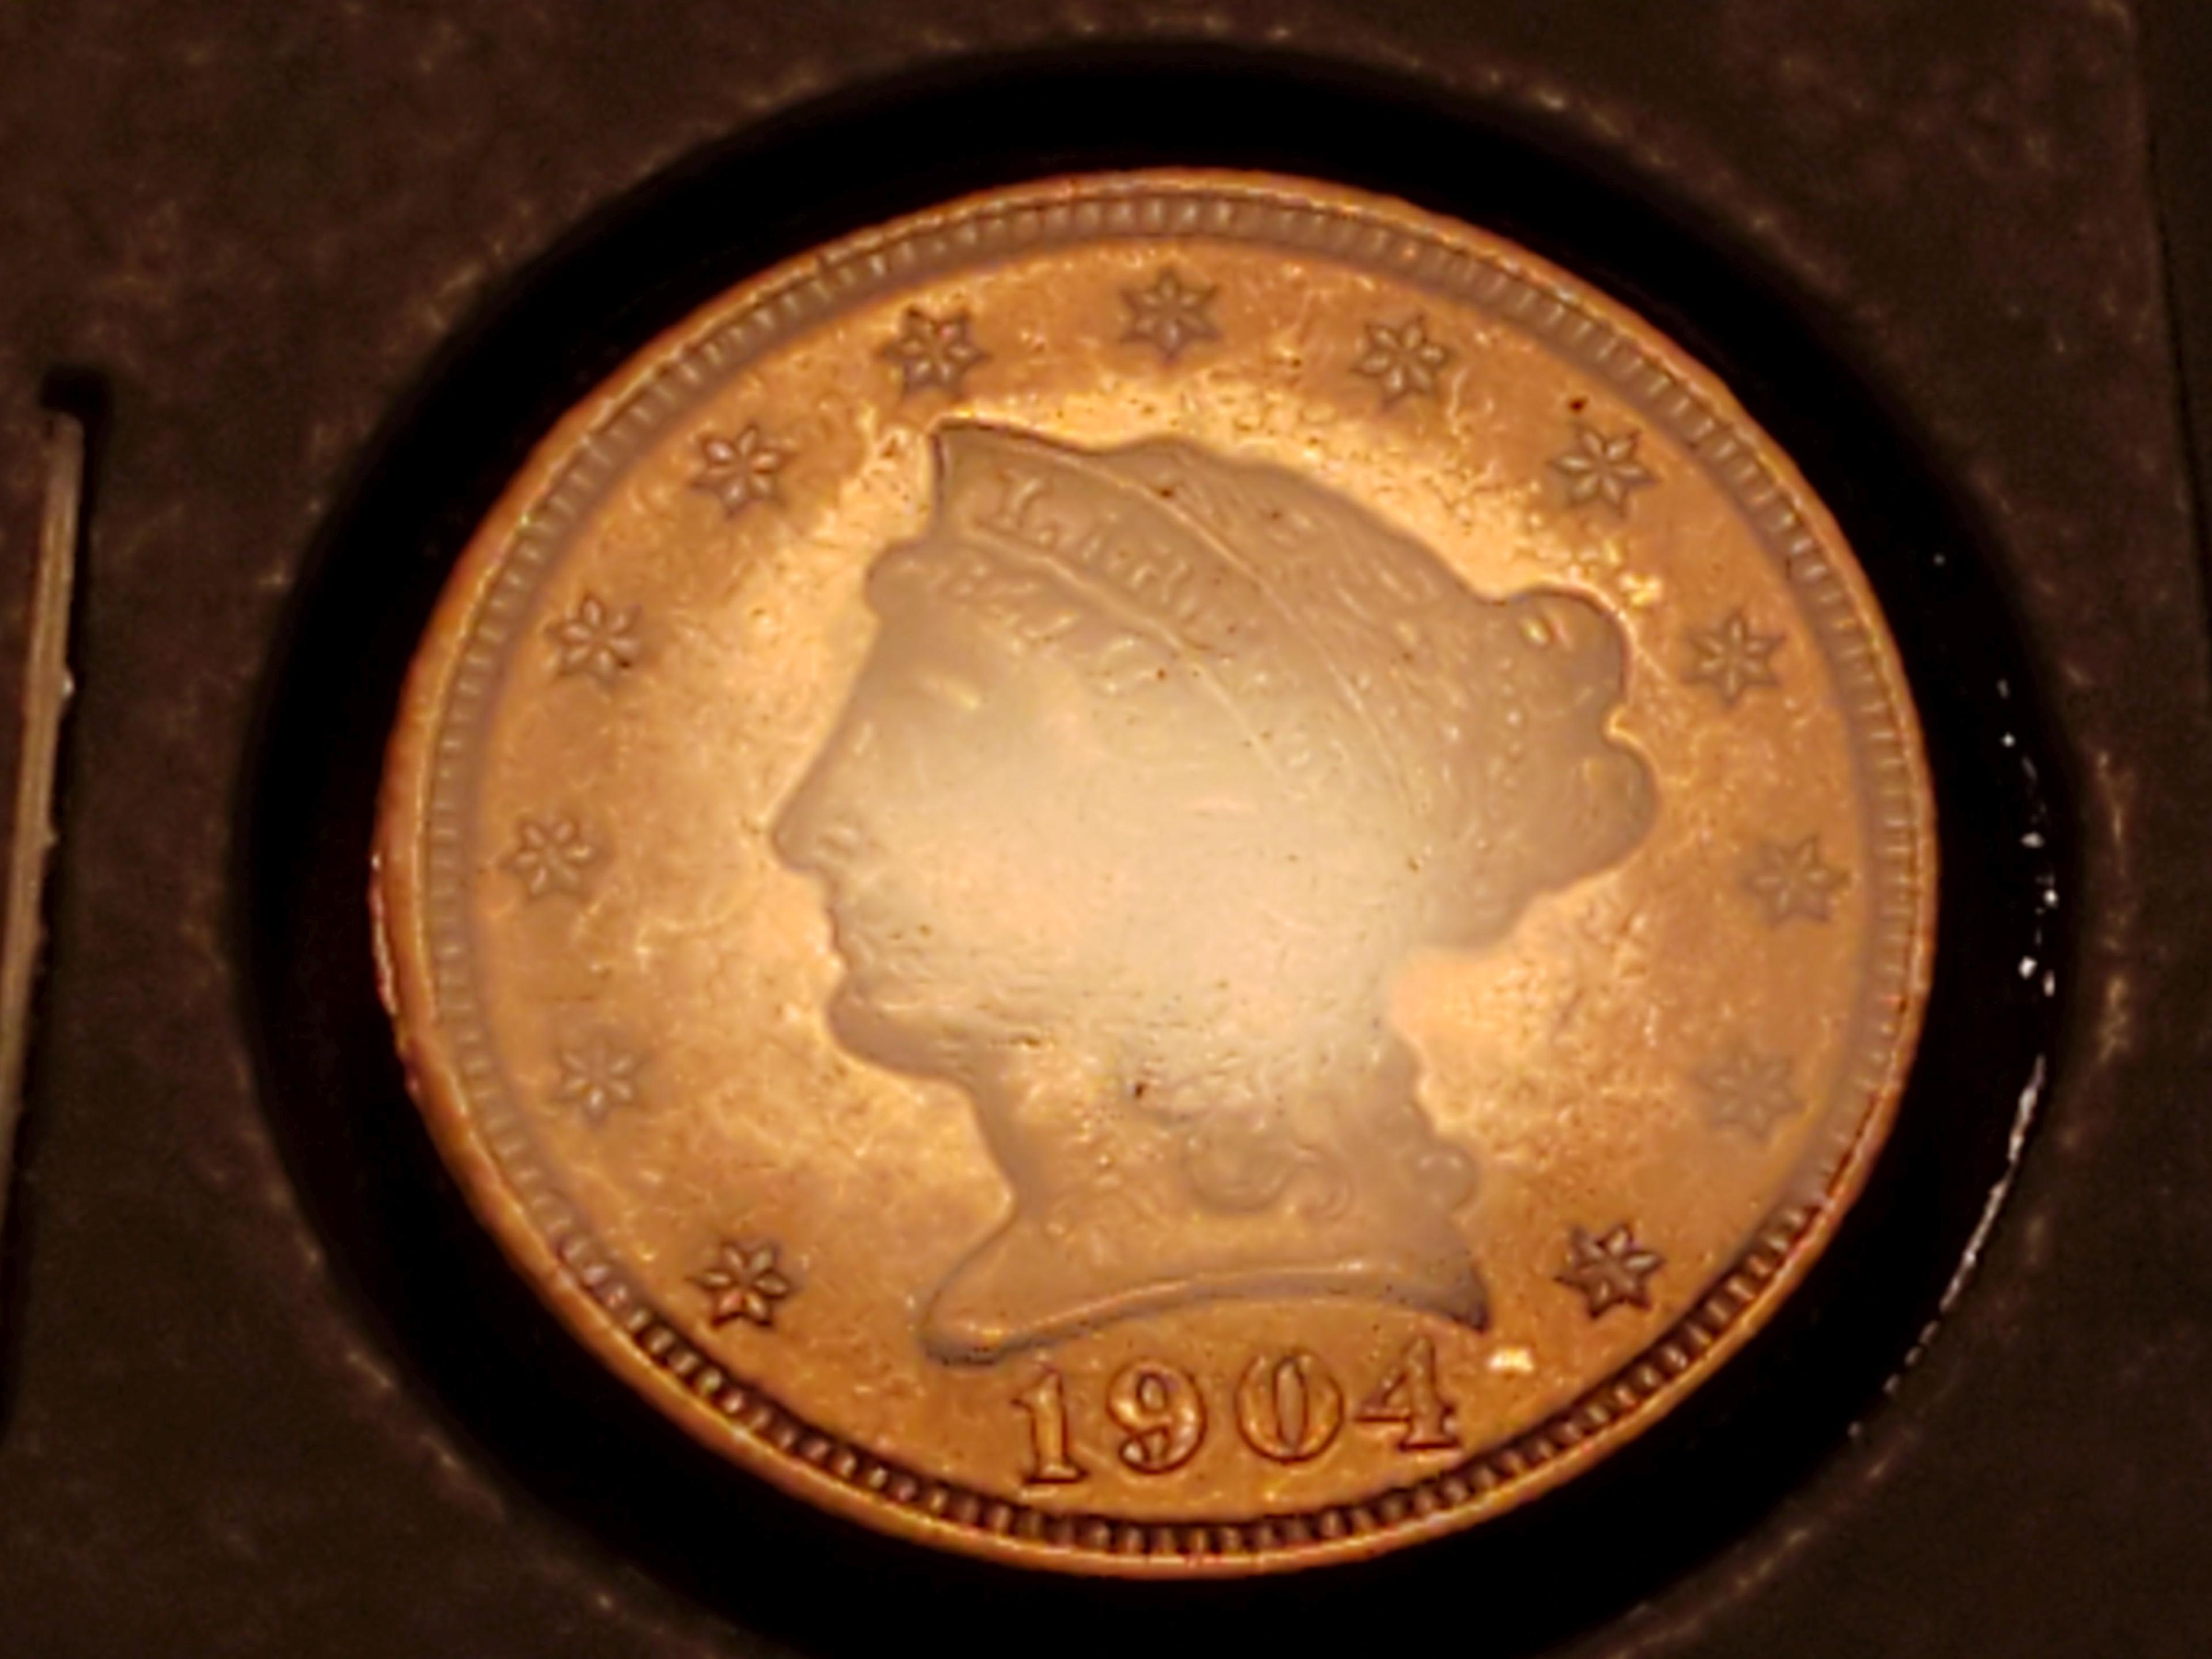 GOLD! Beautiful 1904 Liberty $2.5 gold Quarter Eagle in BU